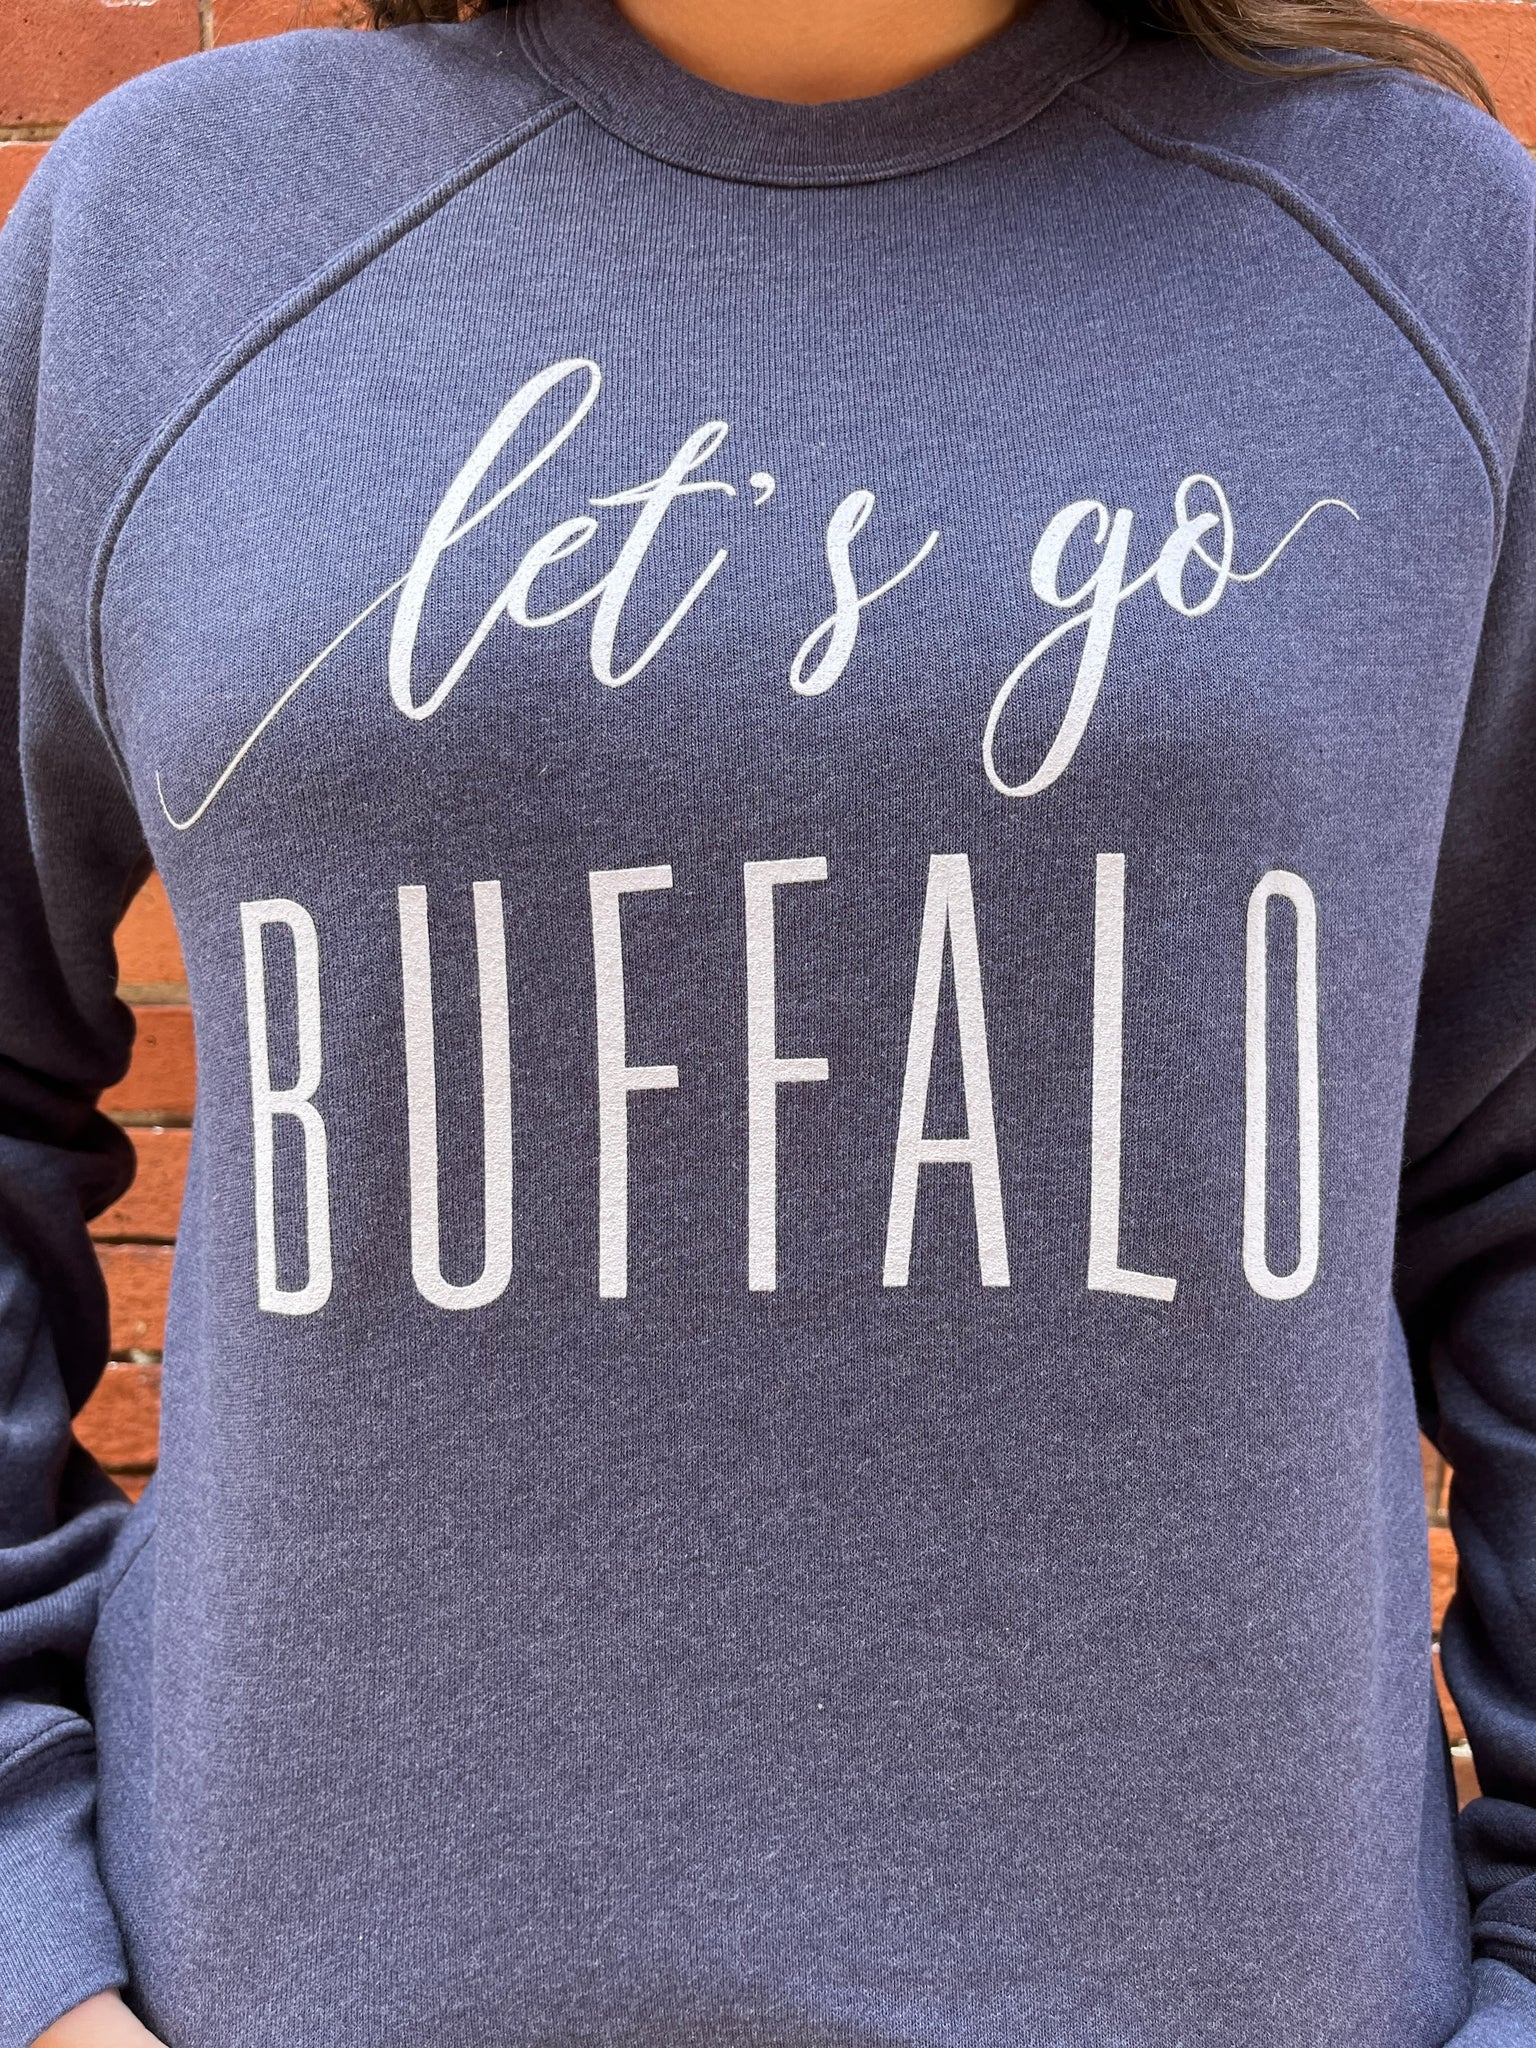 Let's Go Buffalo Crewneck Sweatshirt - Molly + Kate 